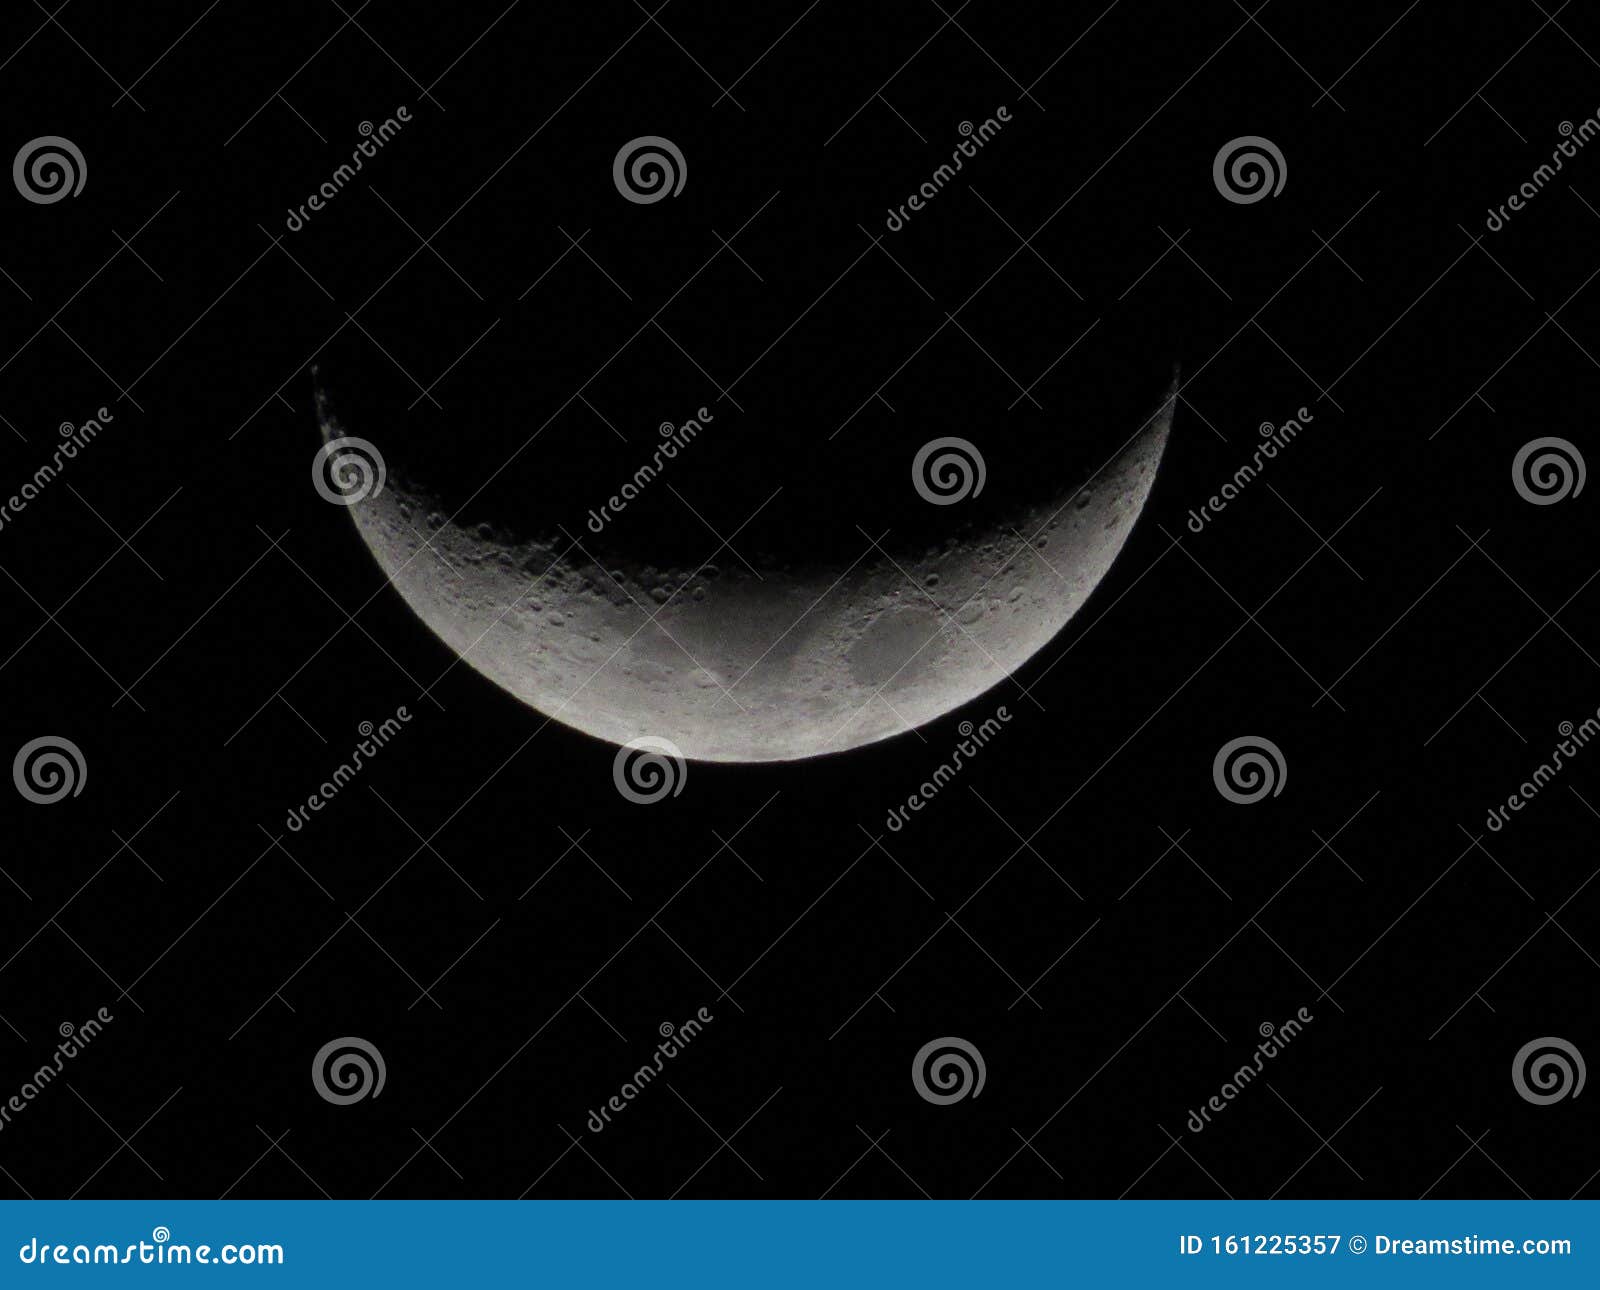 waning moon in the night sky  - lua minguante no cÃÂ©u noturno